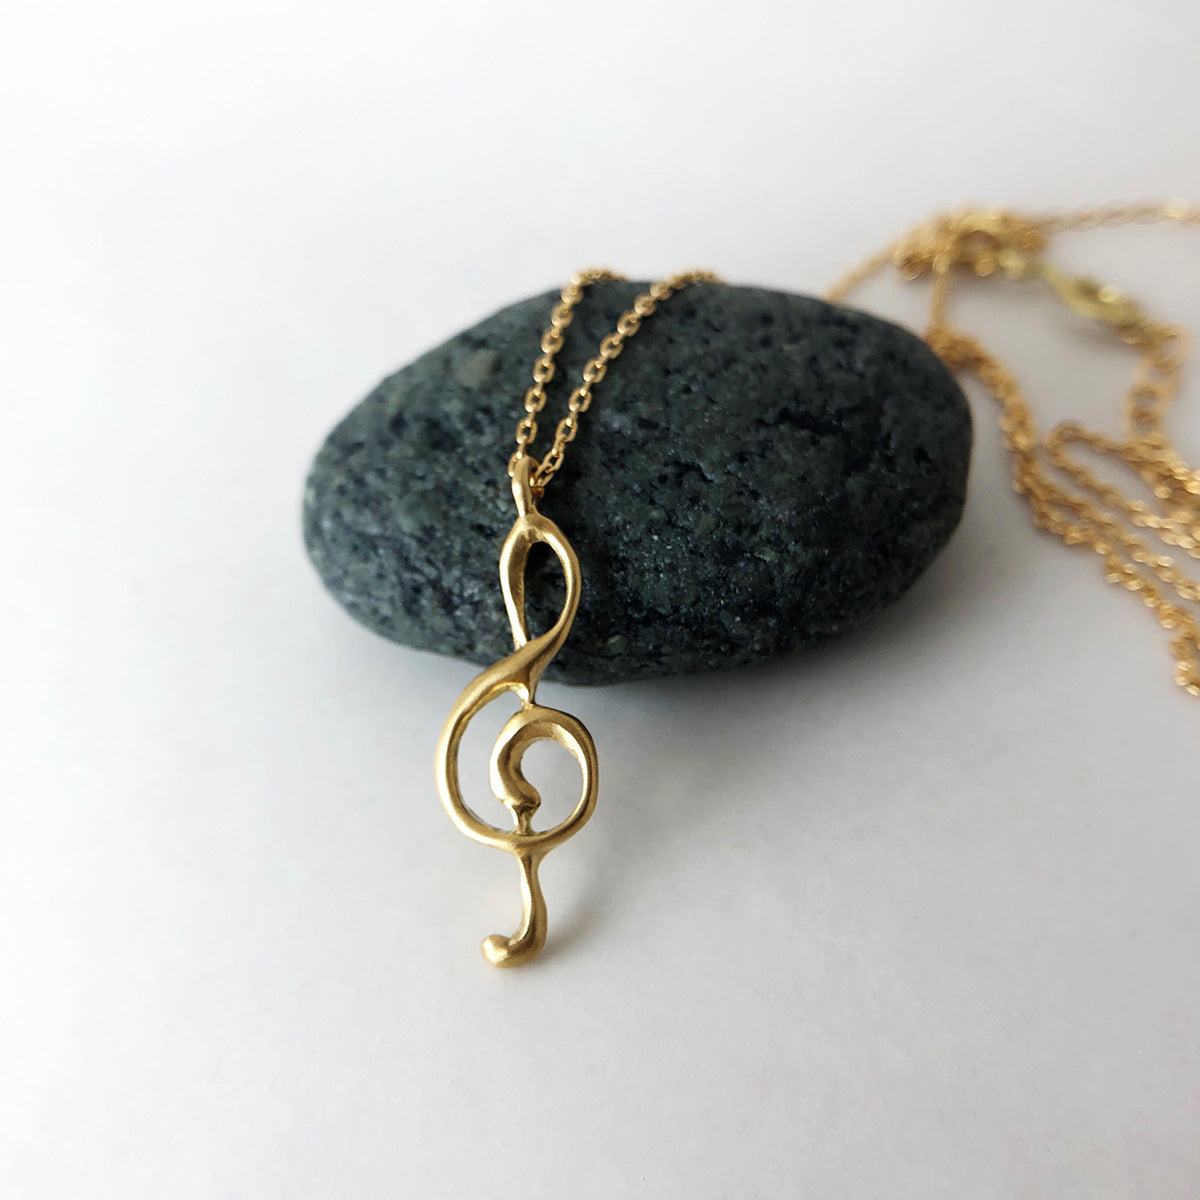 Golden Treble Clef Necklace (18k)